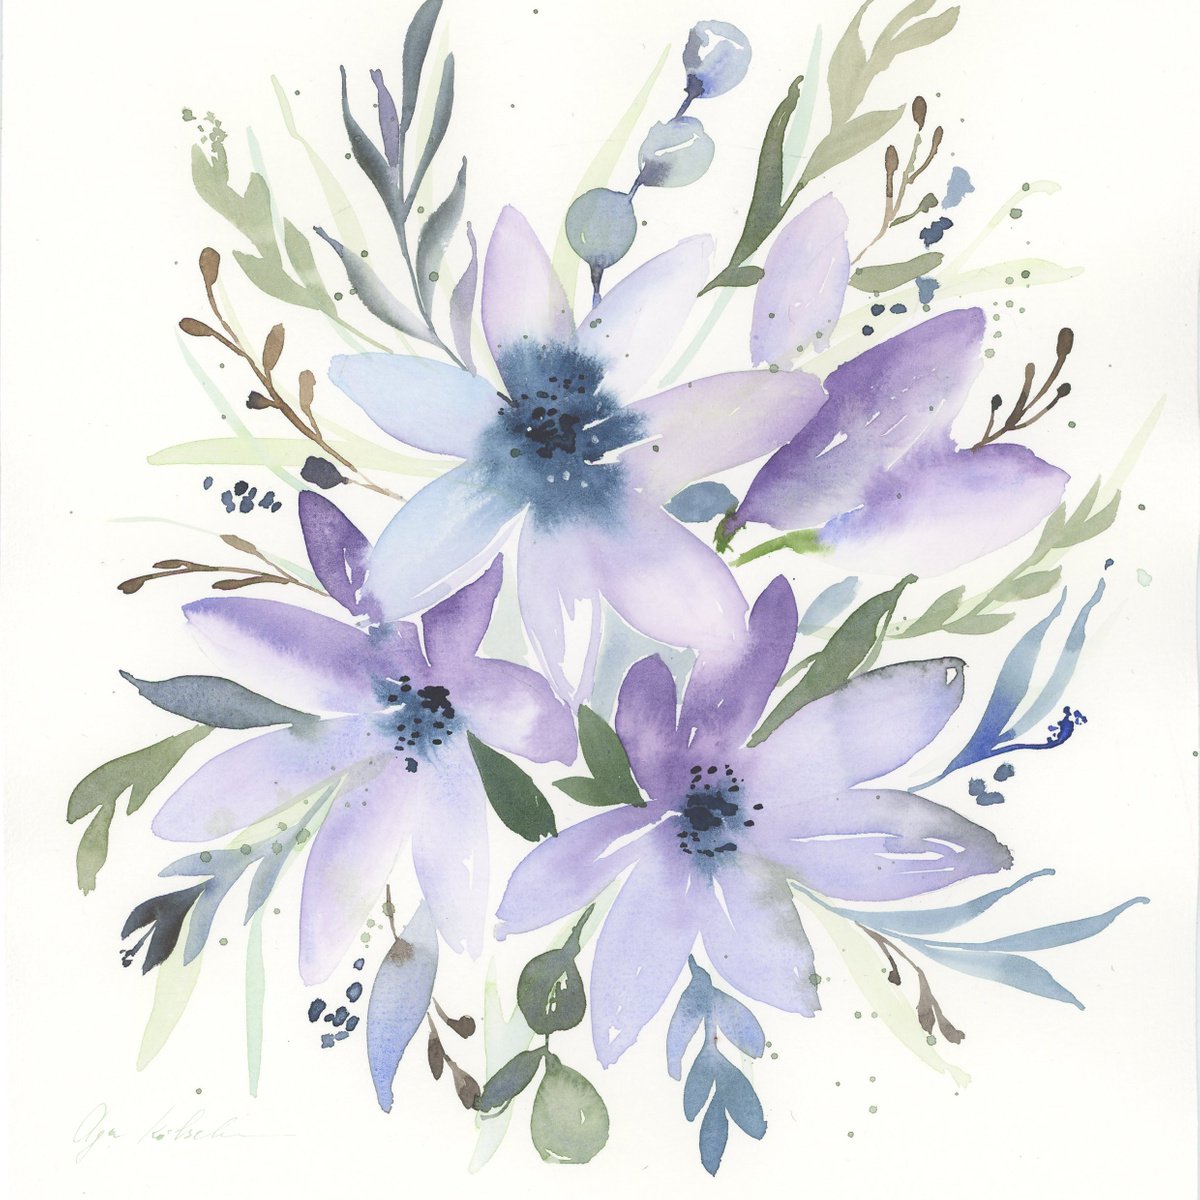 Dusty blue and purple wedding floral bouquet by Olga Koelsch